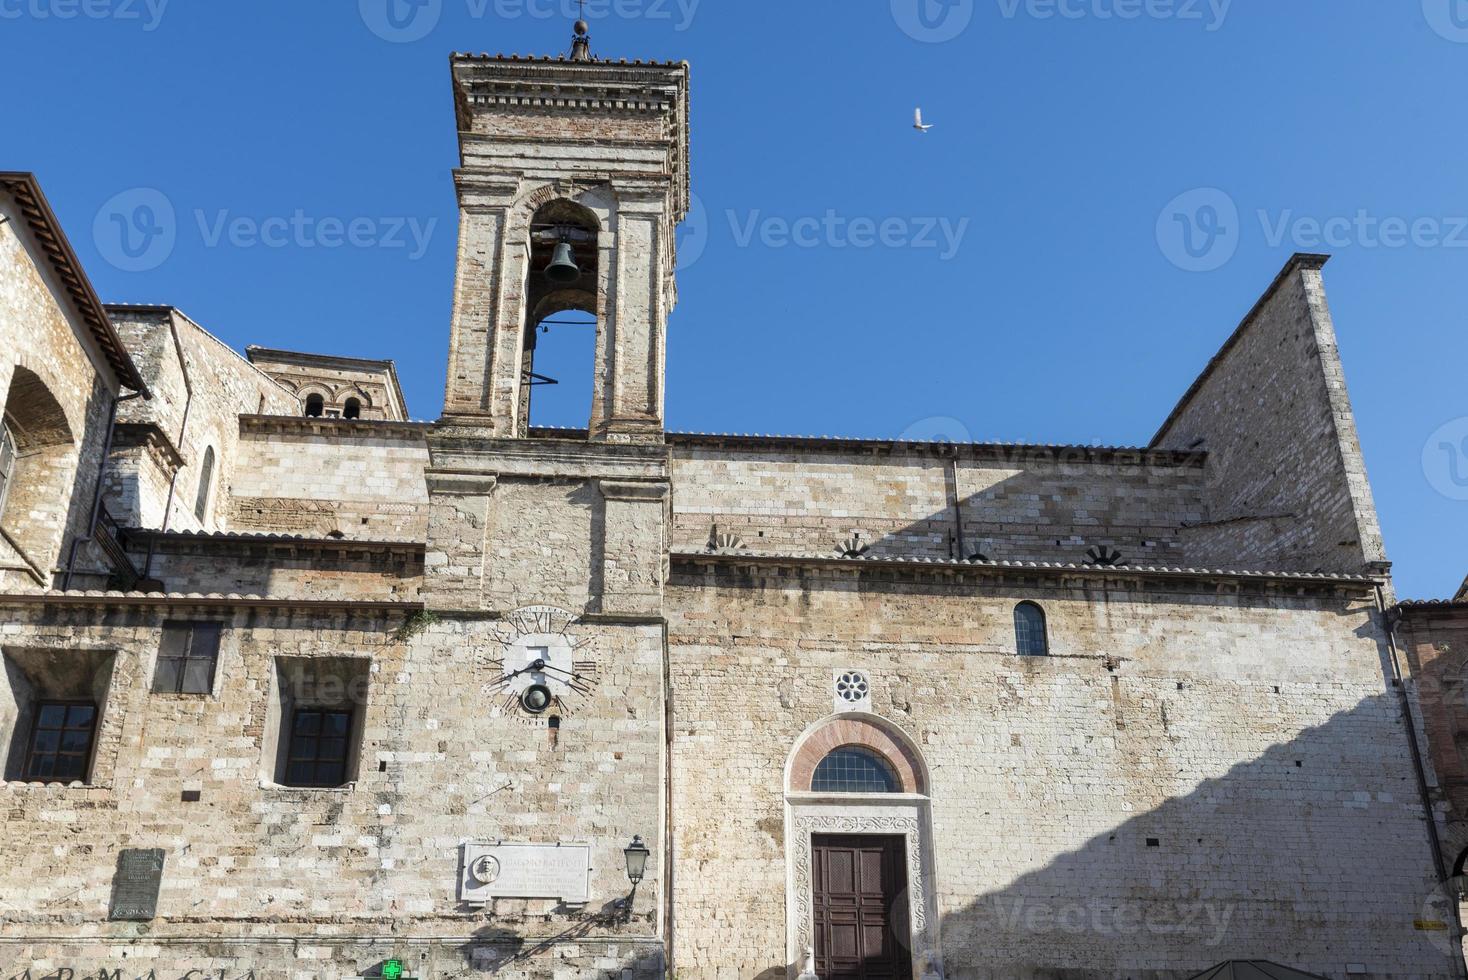 Kathedrale von San Giveale in Narni, Italien, 2020 foto